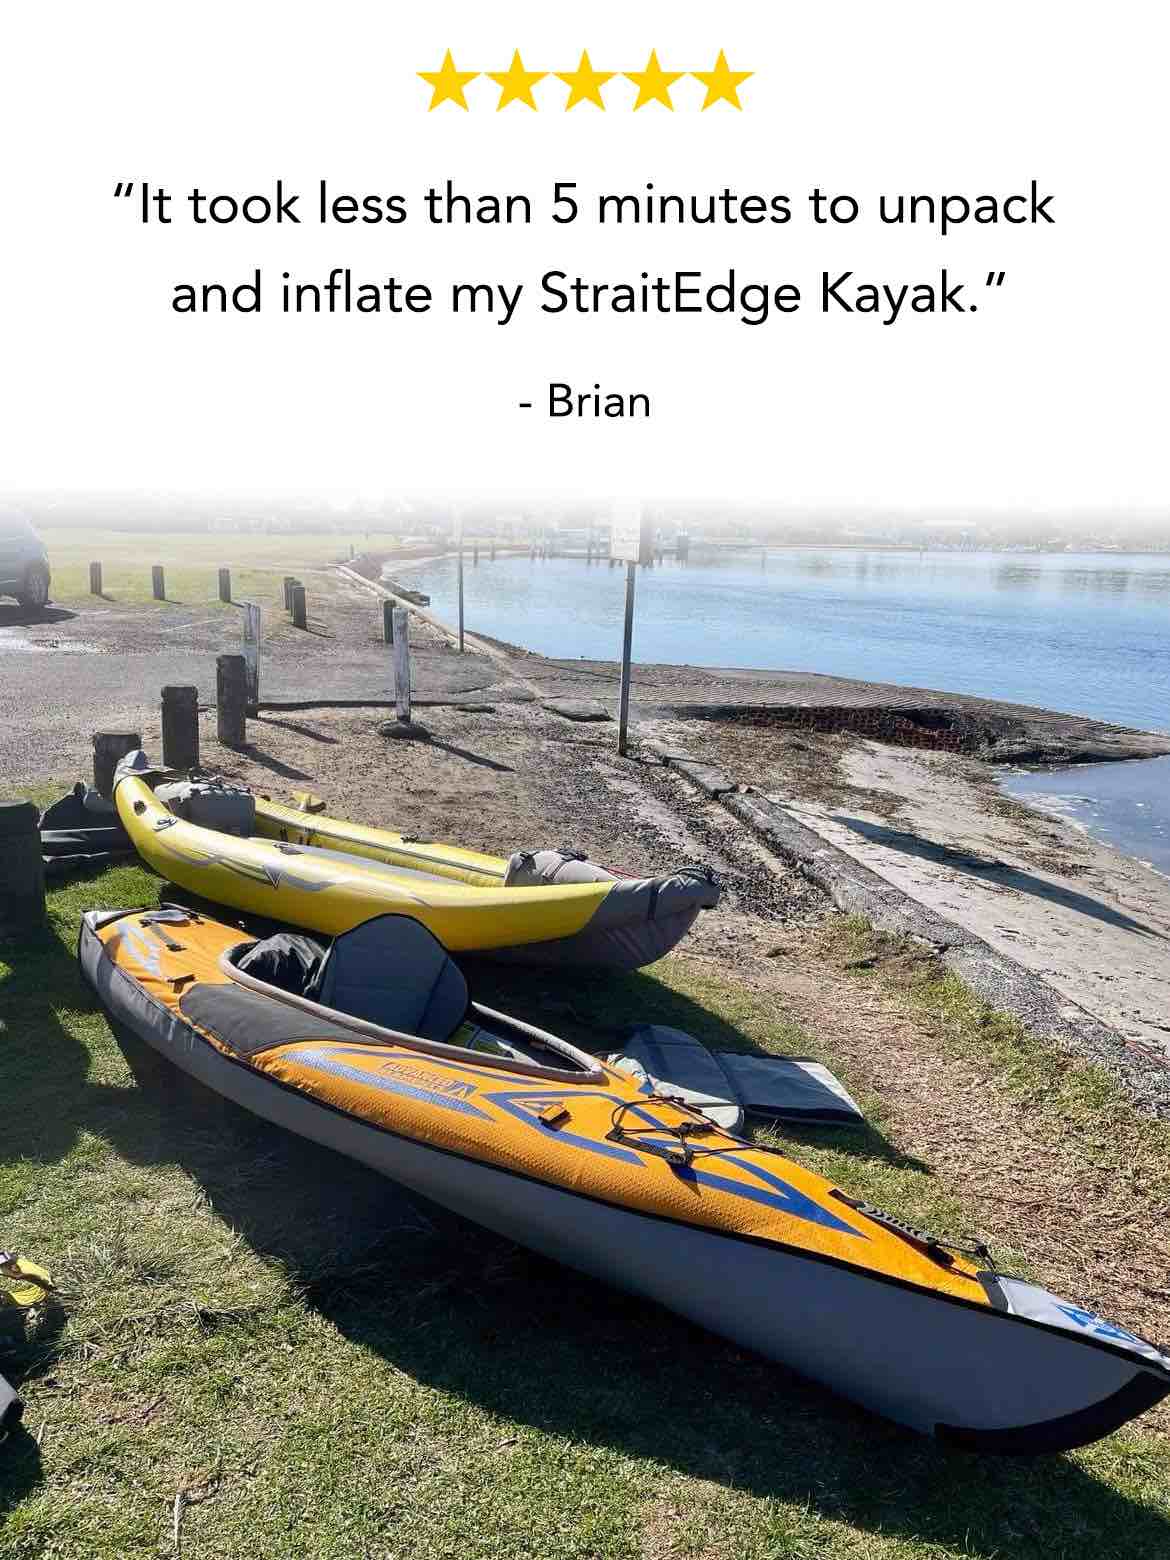 straitedge kayak brian review inflation